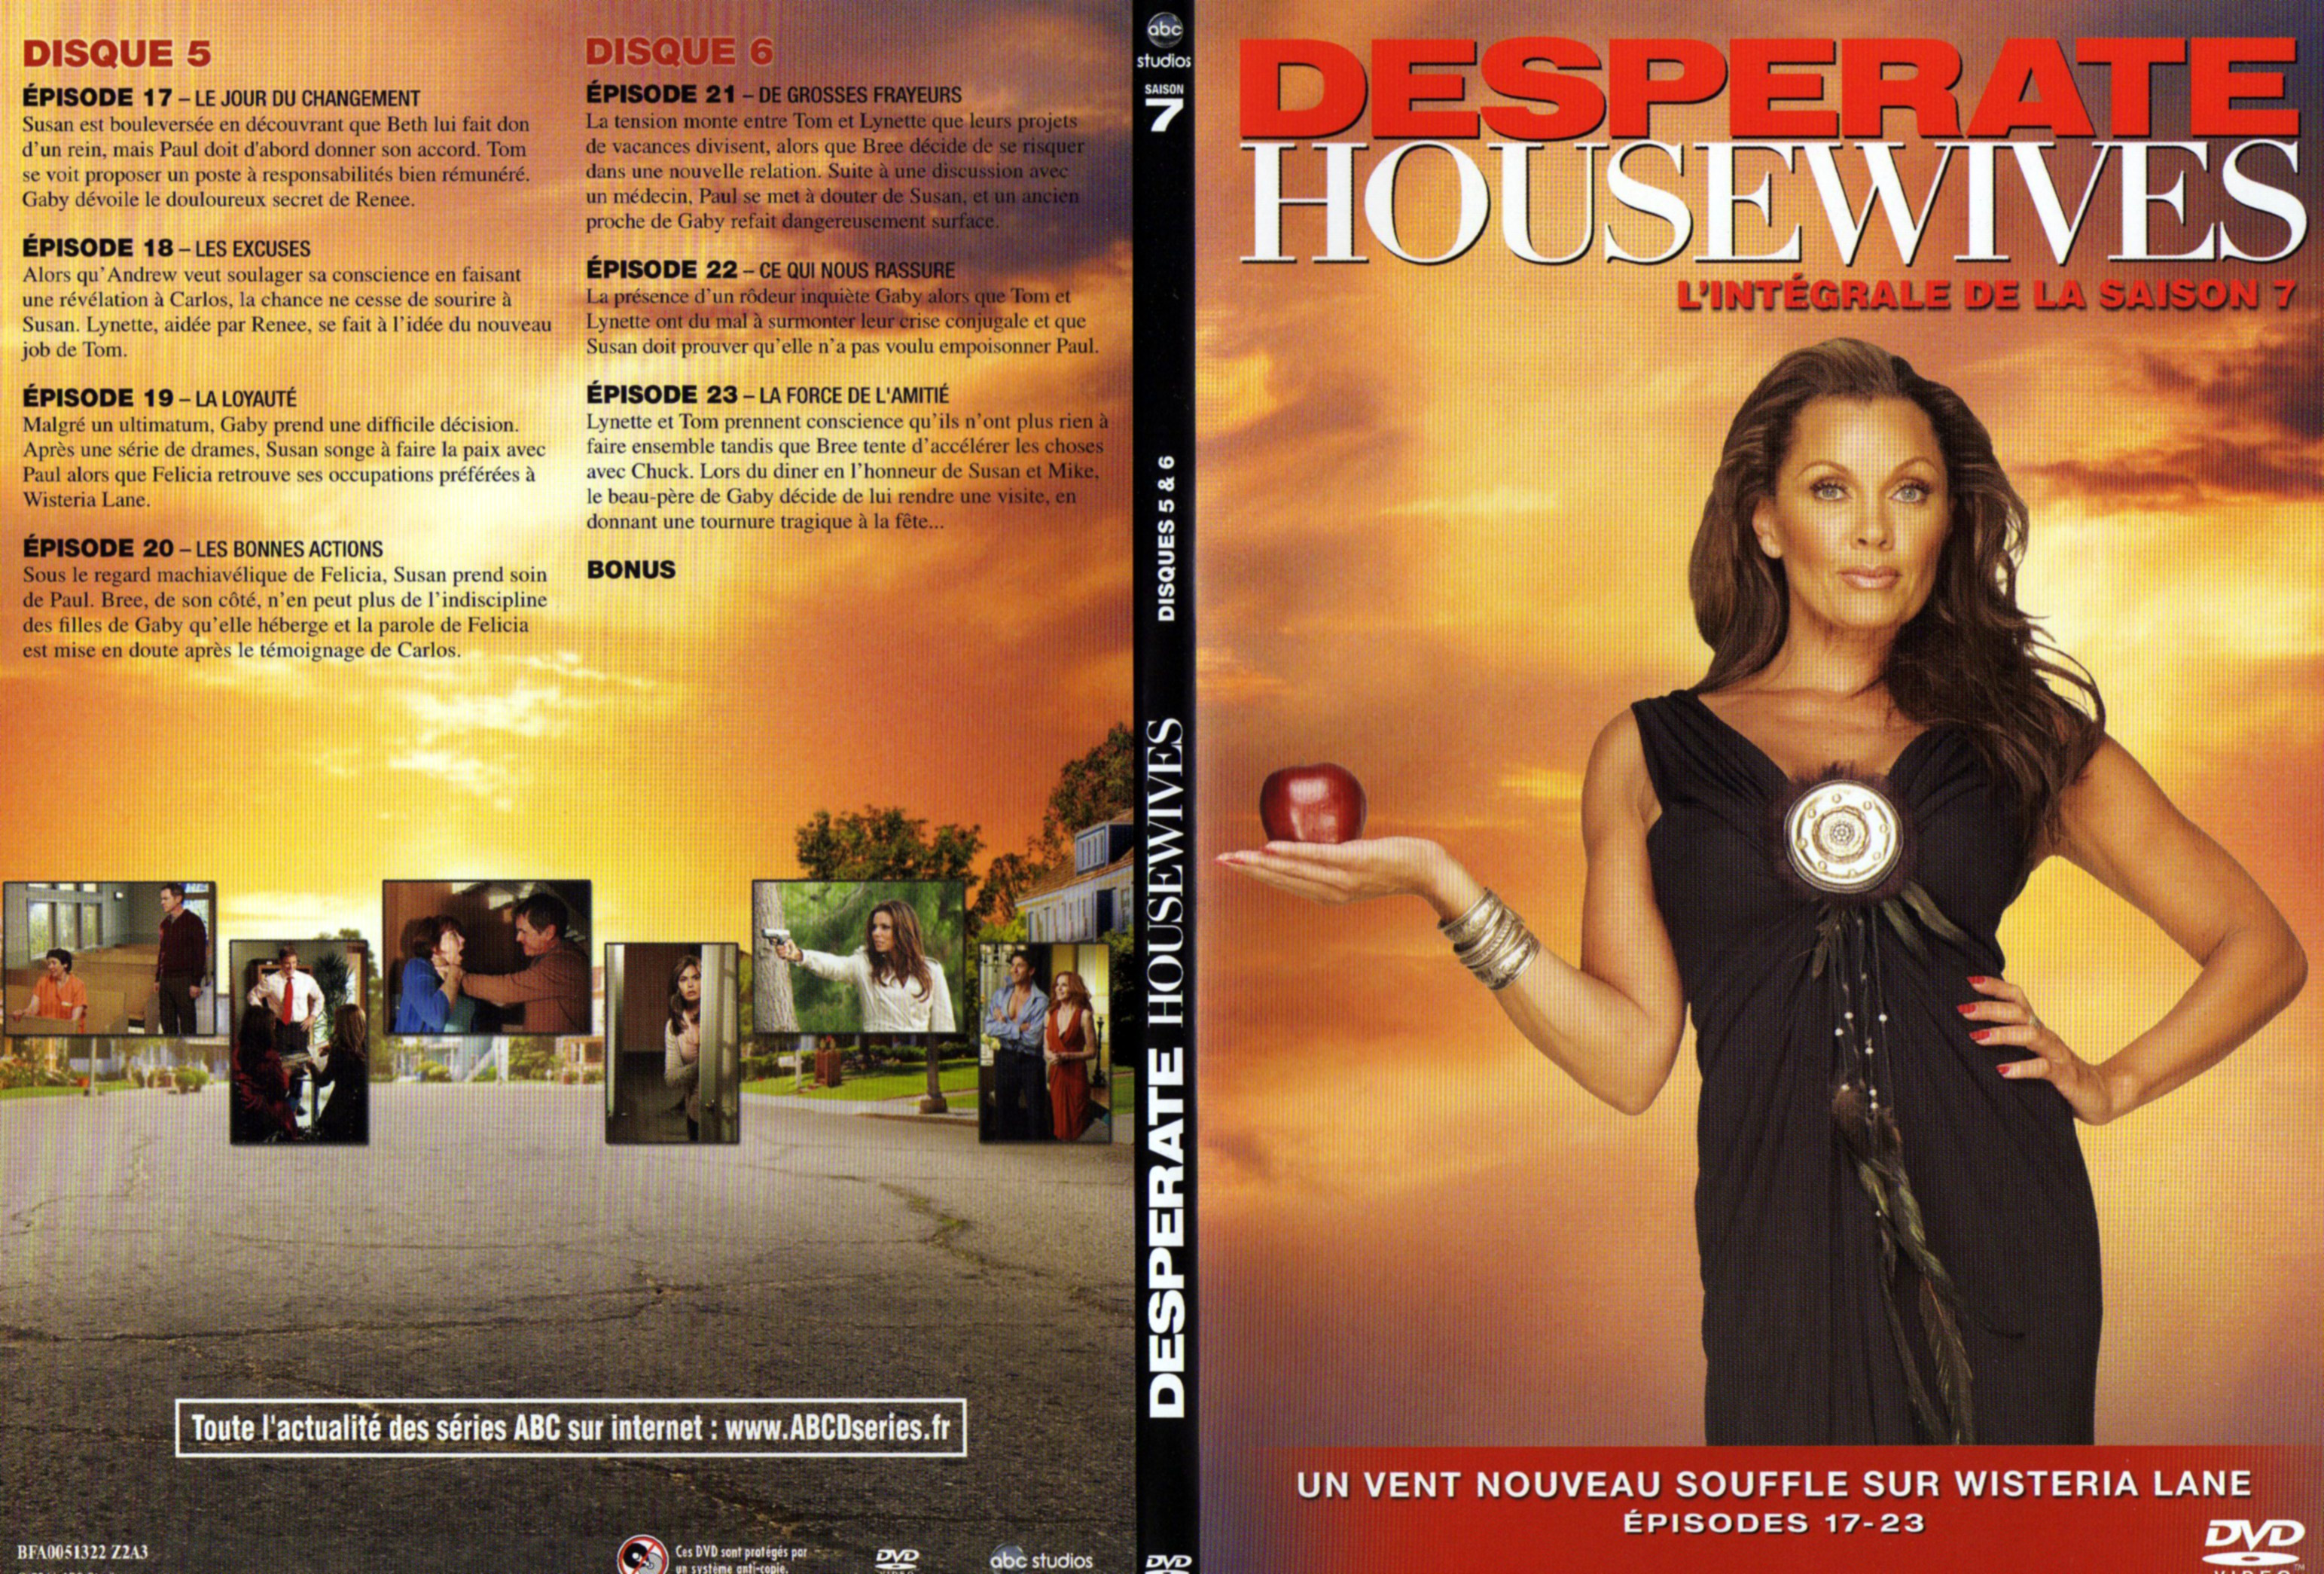 Jaquette DVD Desperate housewives Saison 7 DVD 3